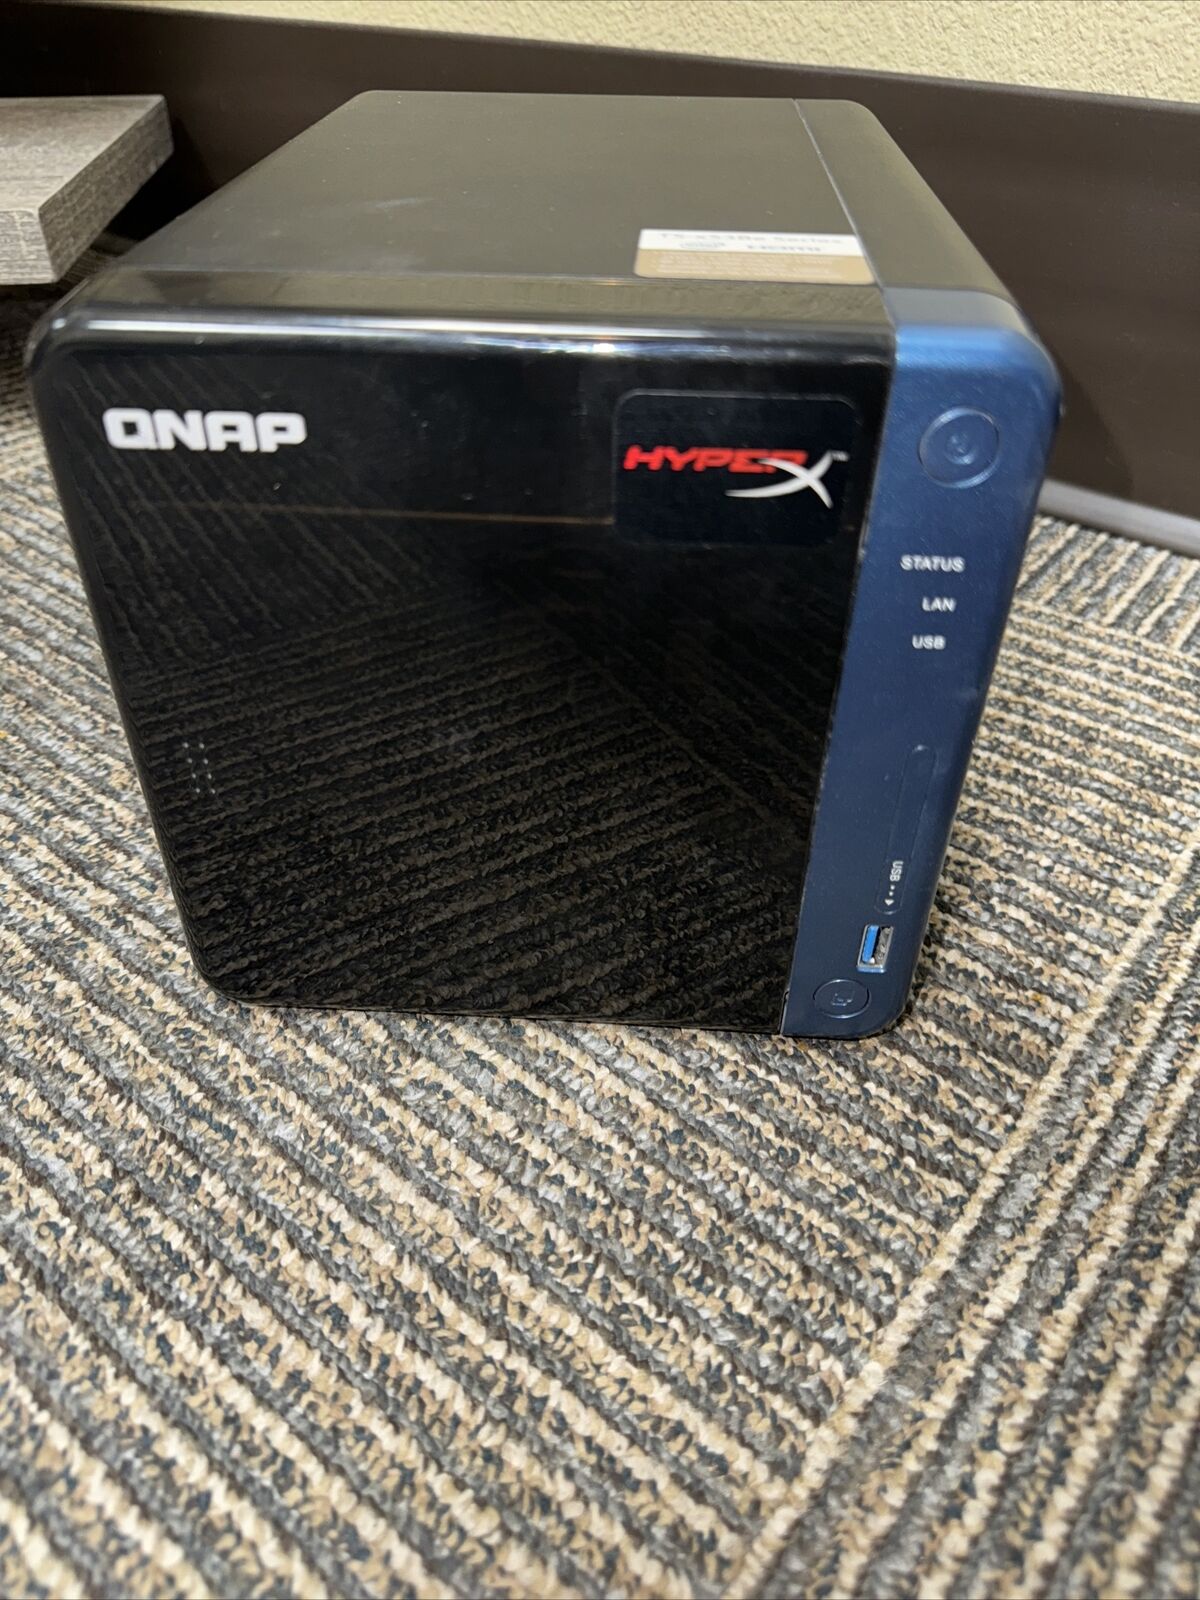 QNAP TS-253B 2-Bay Network Attached Storage - No HDD w/ Power Supply